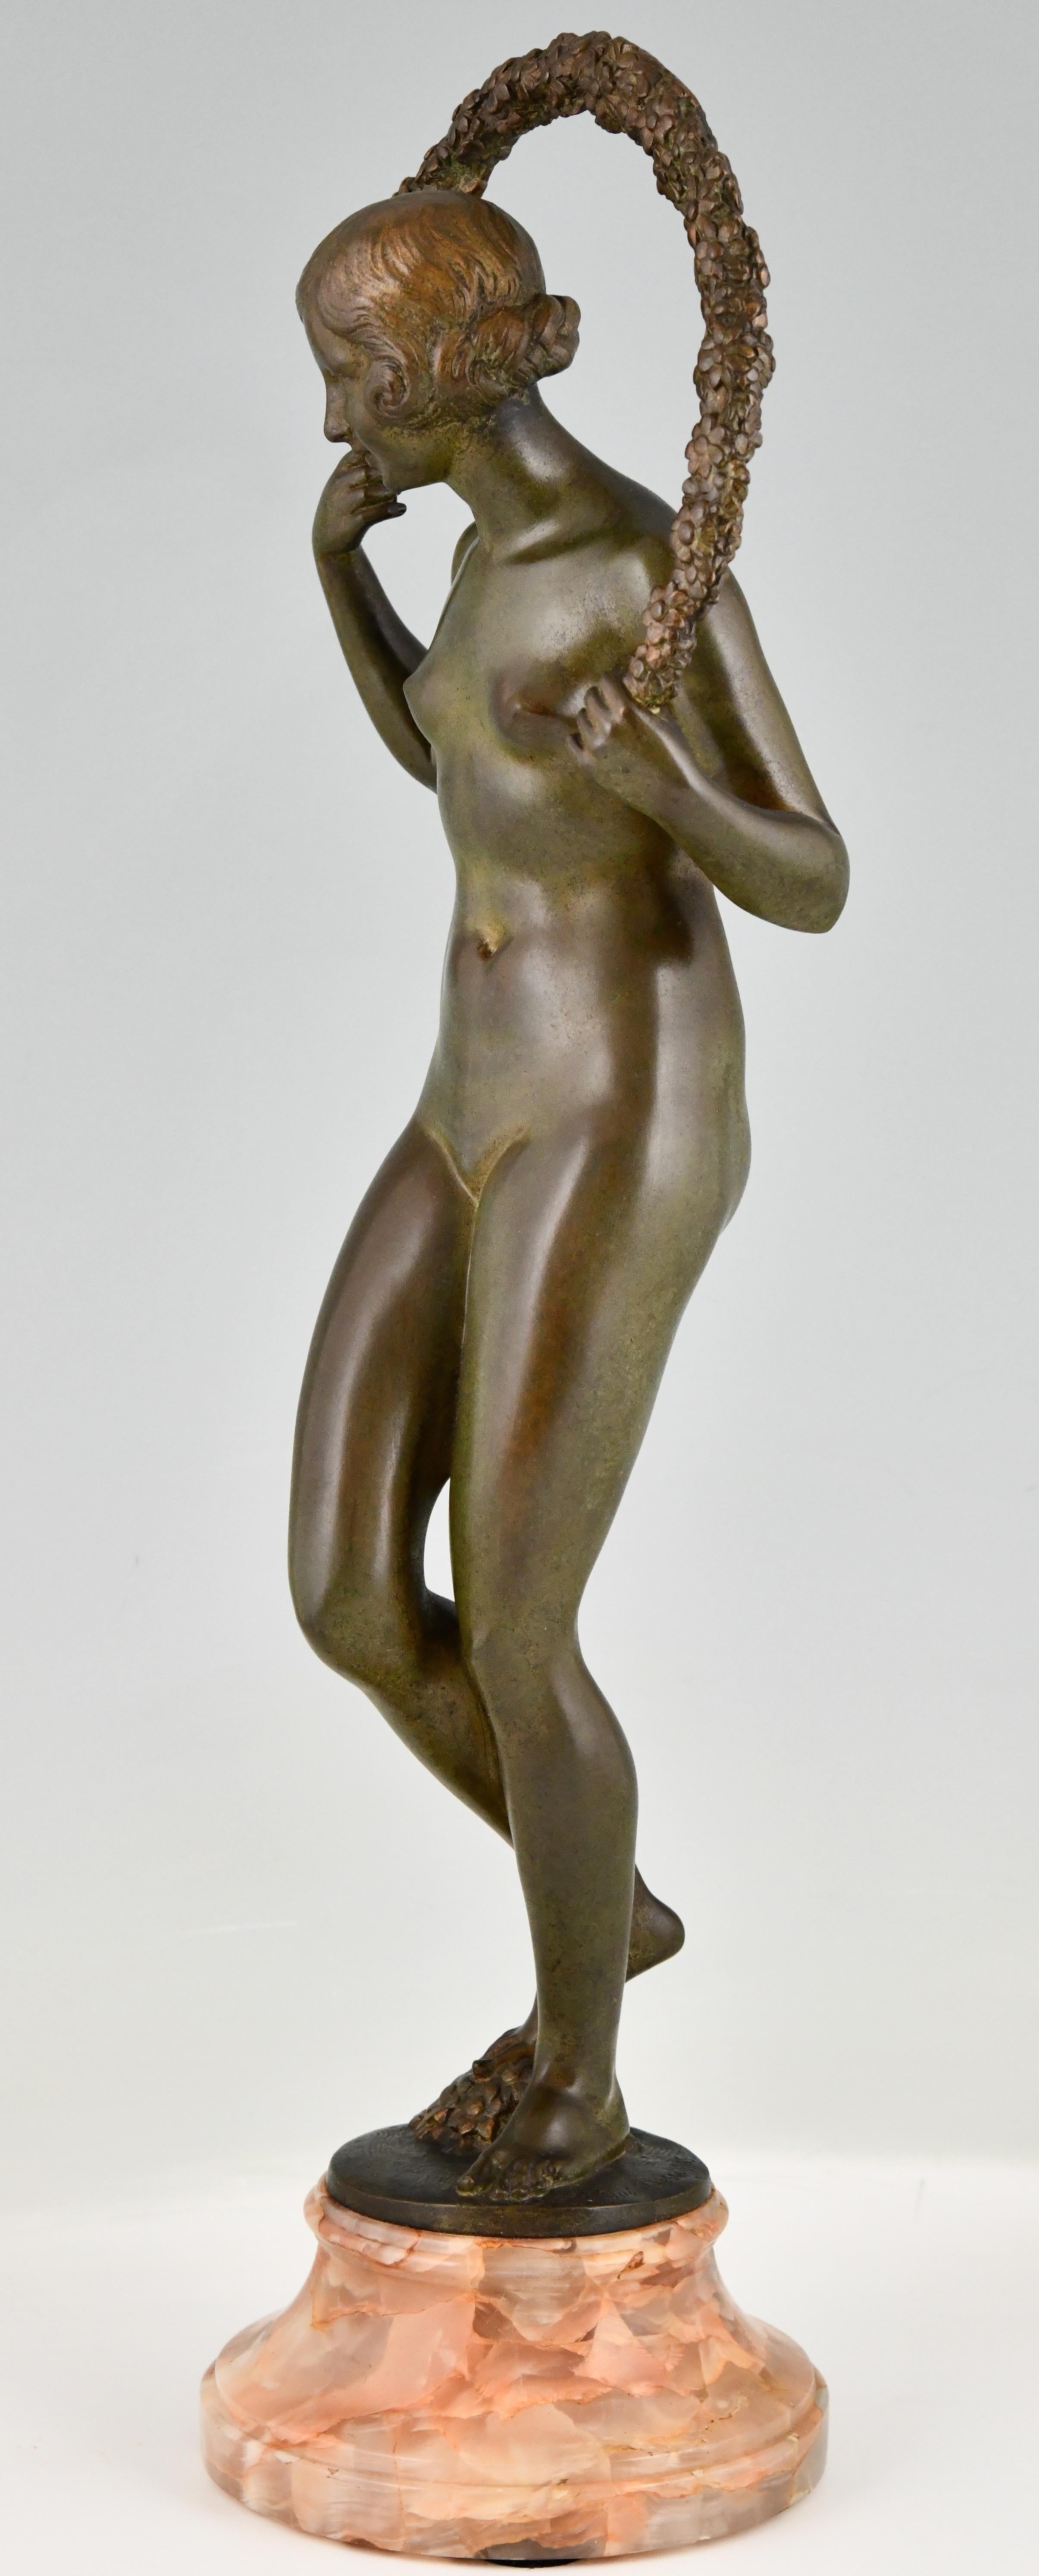 Art Deco Bronze Sculpture Nude with Garland by Joe Descomps Cormier 1925 For Sale 2